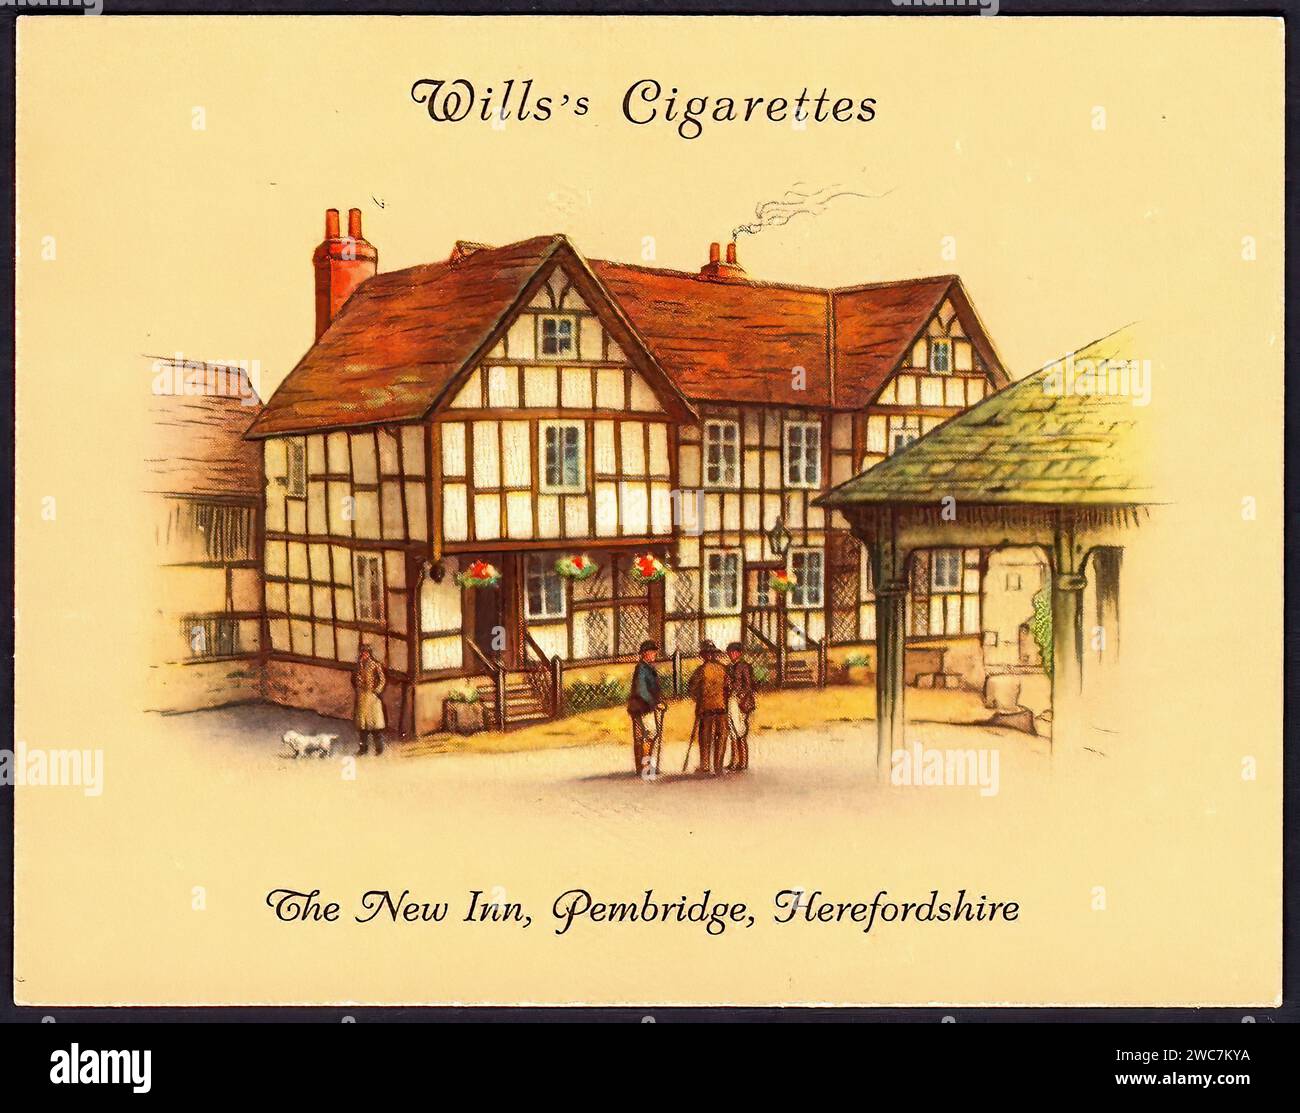 The New Inn, Pembridge - Vintage Cigarette Card Illustration Stock Photo